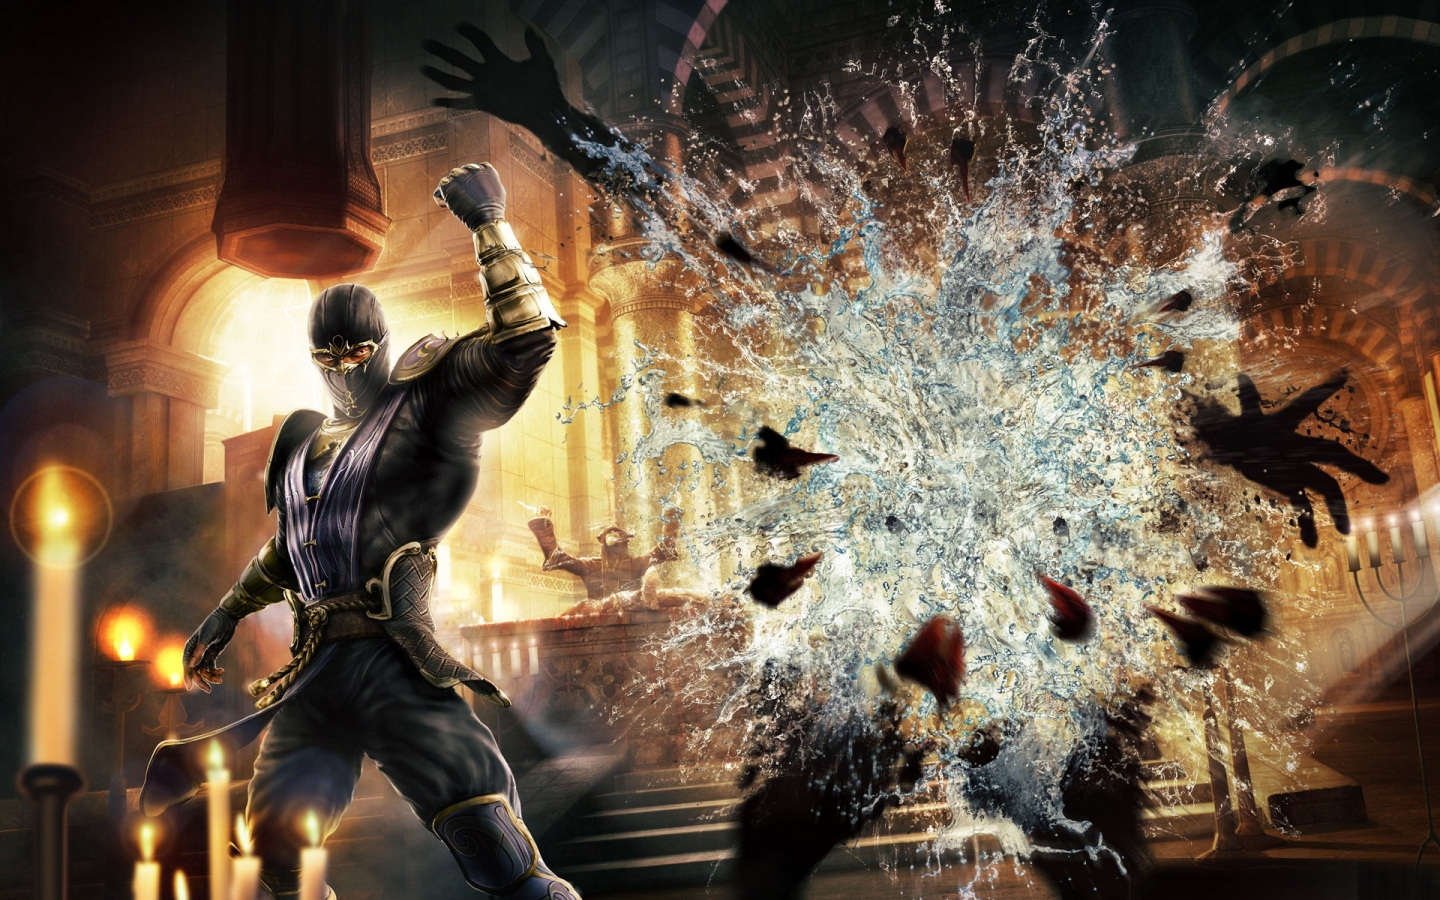 Mortal Kombat Fatality for 1440 x 900 widescreen resolution